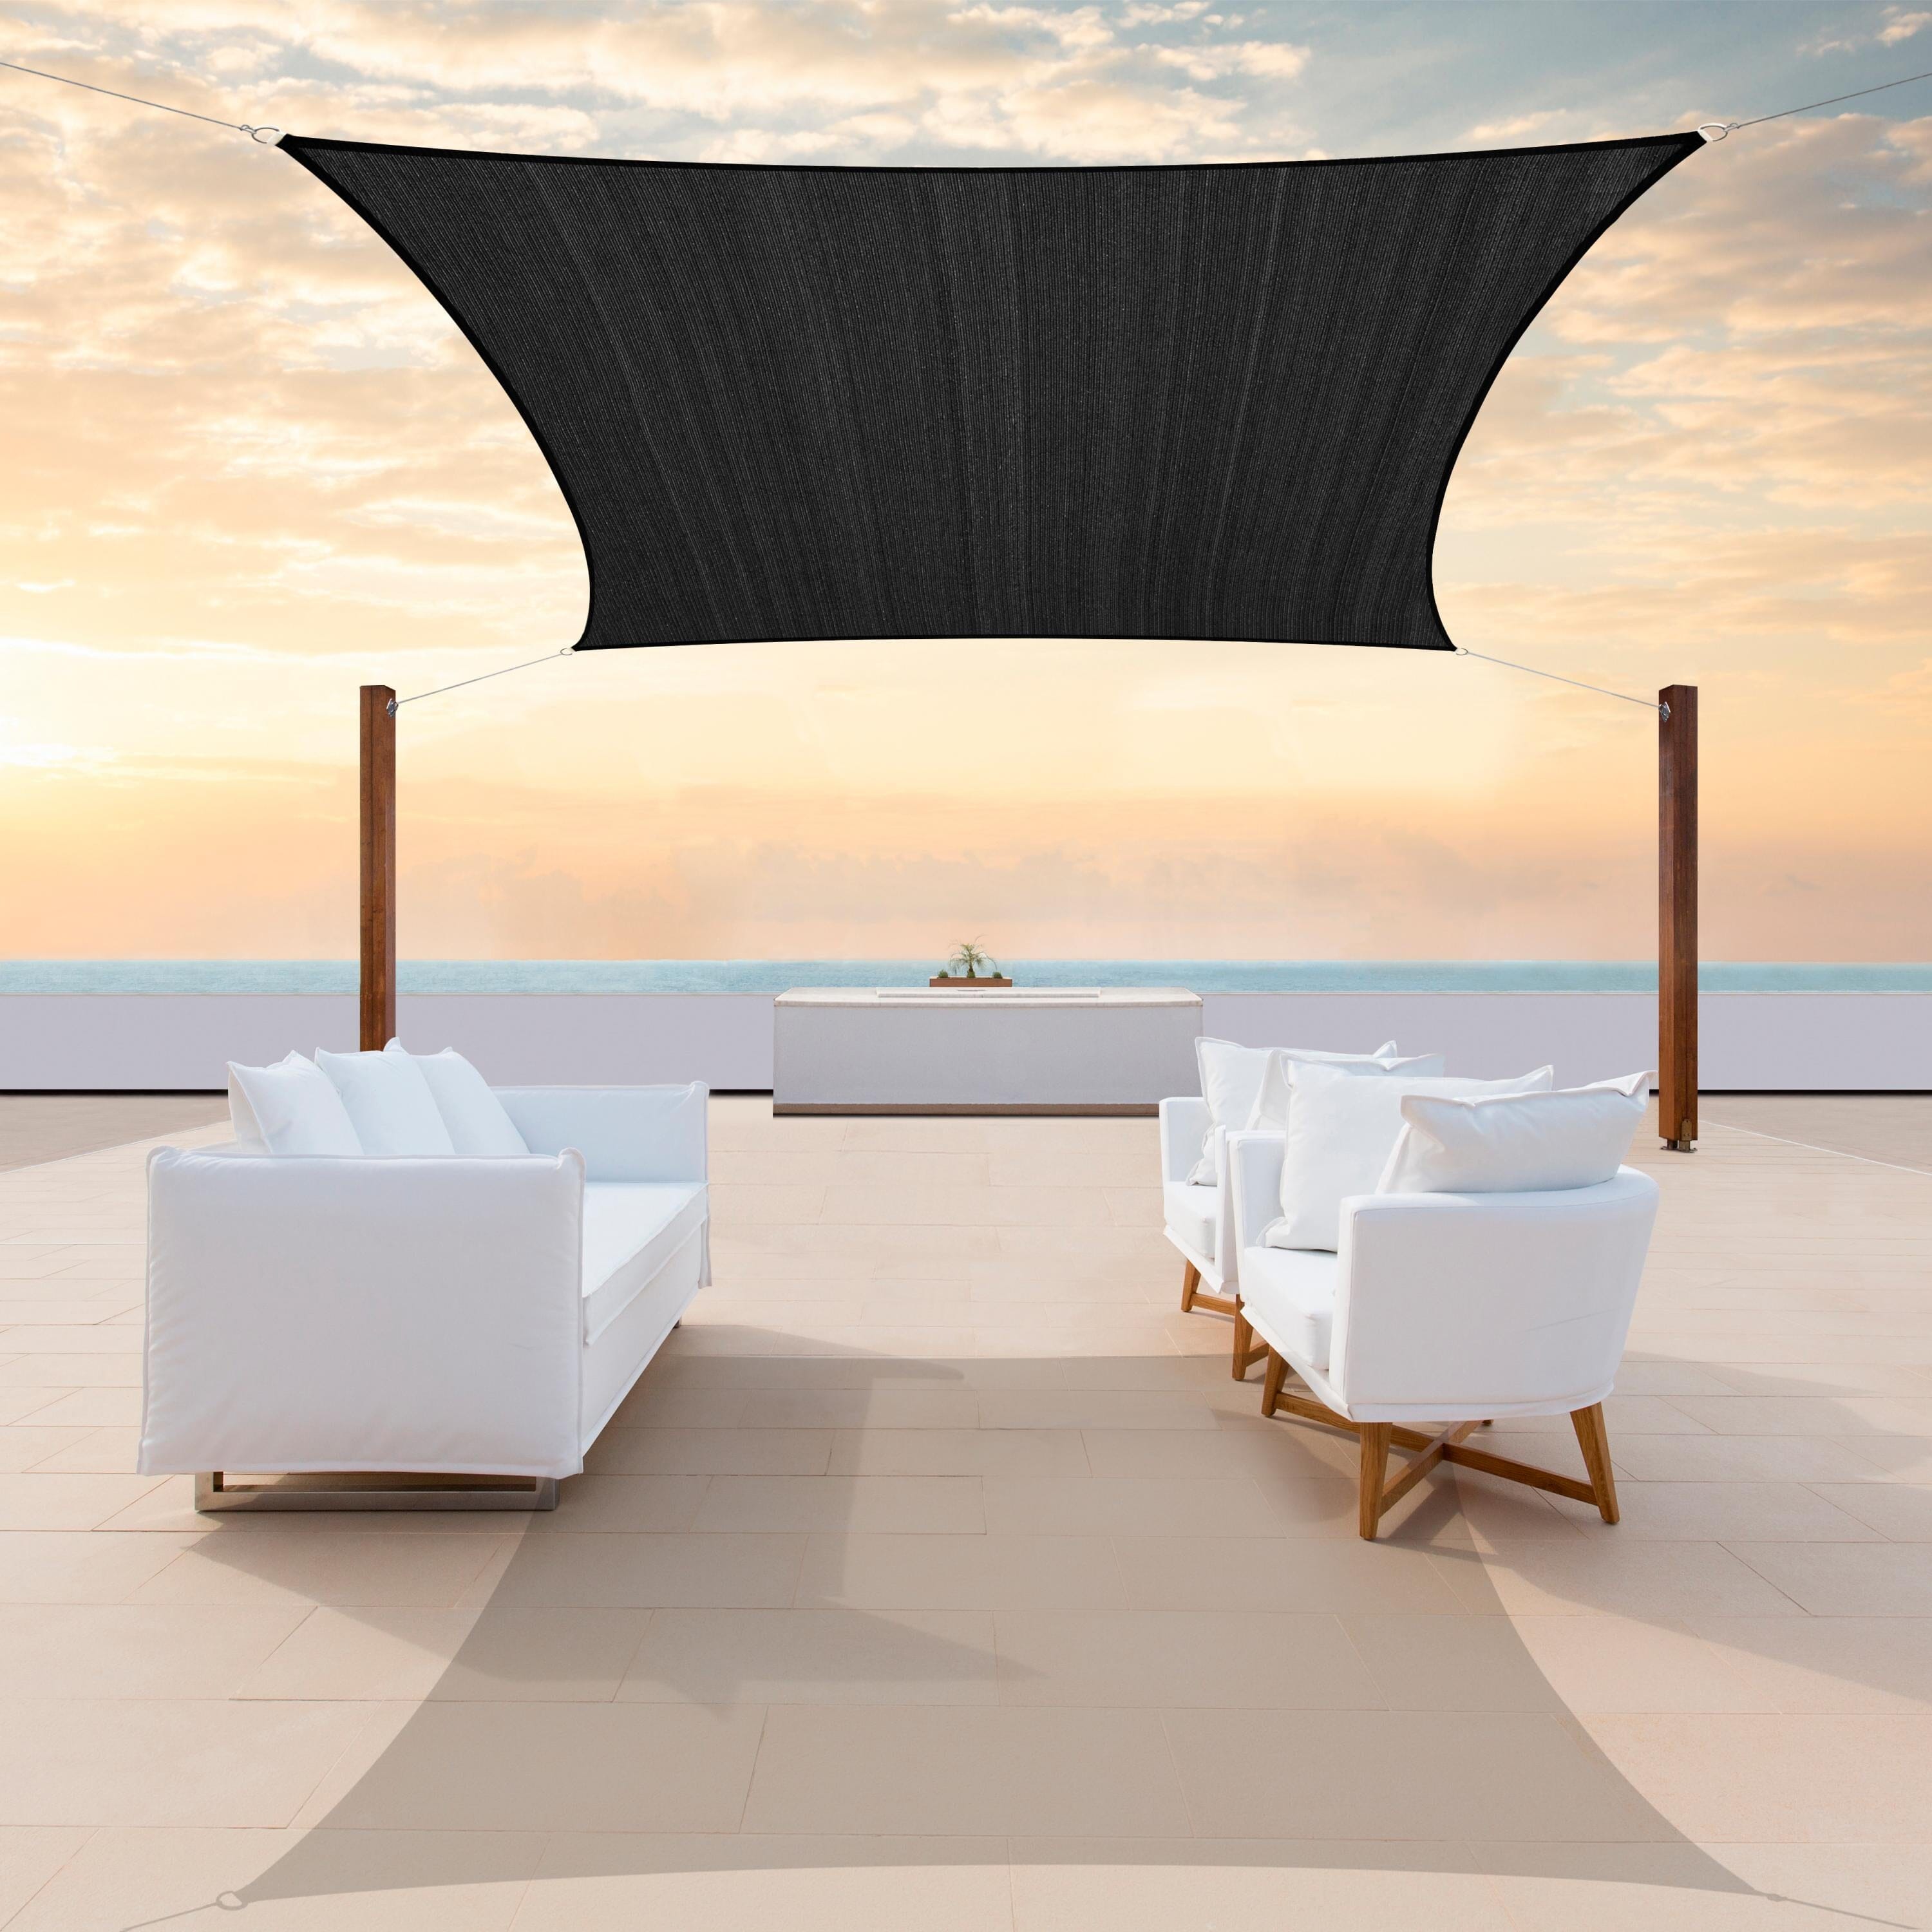 Square Sun Shade Sail Canopy, Commercial Grade, 4 Sizes, 8 Colors Sun Shade Sail Colourtree 10' x 10 Black 